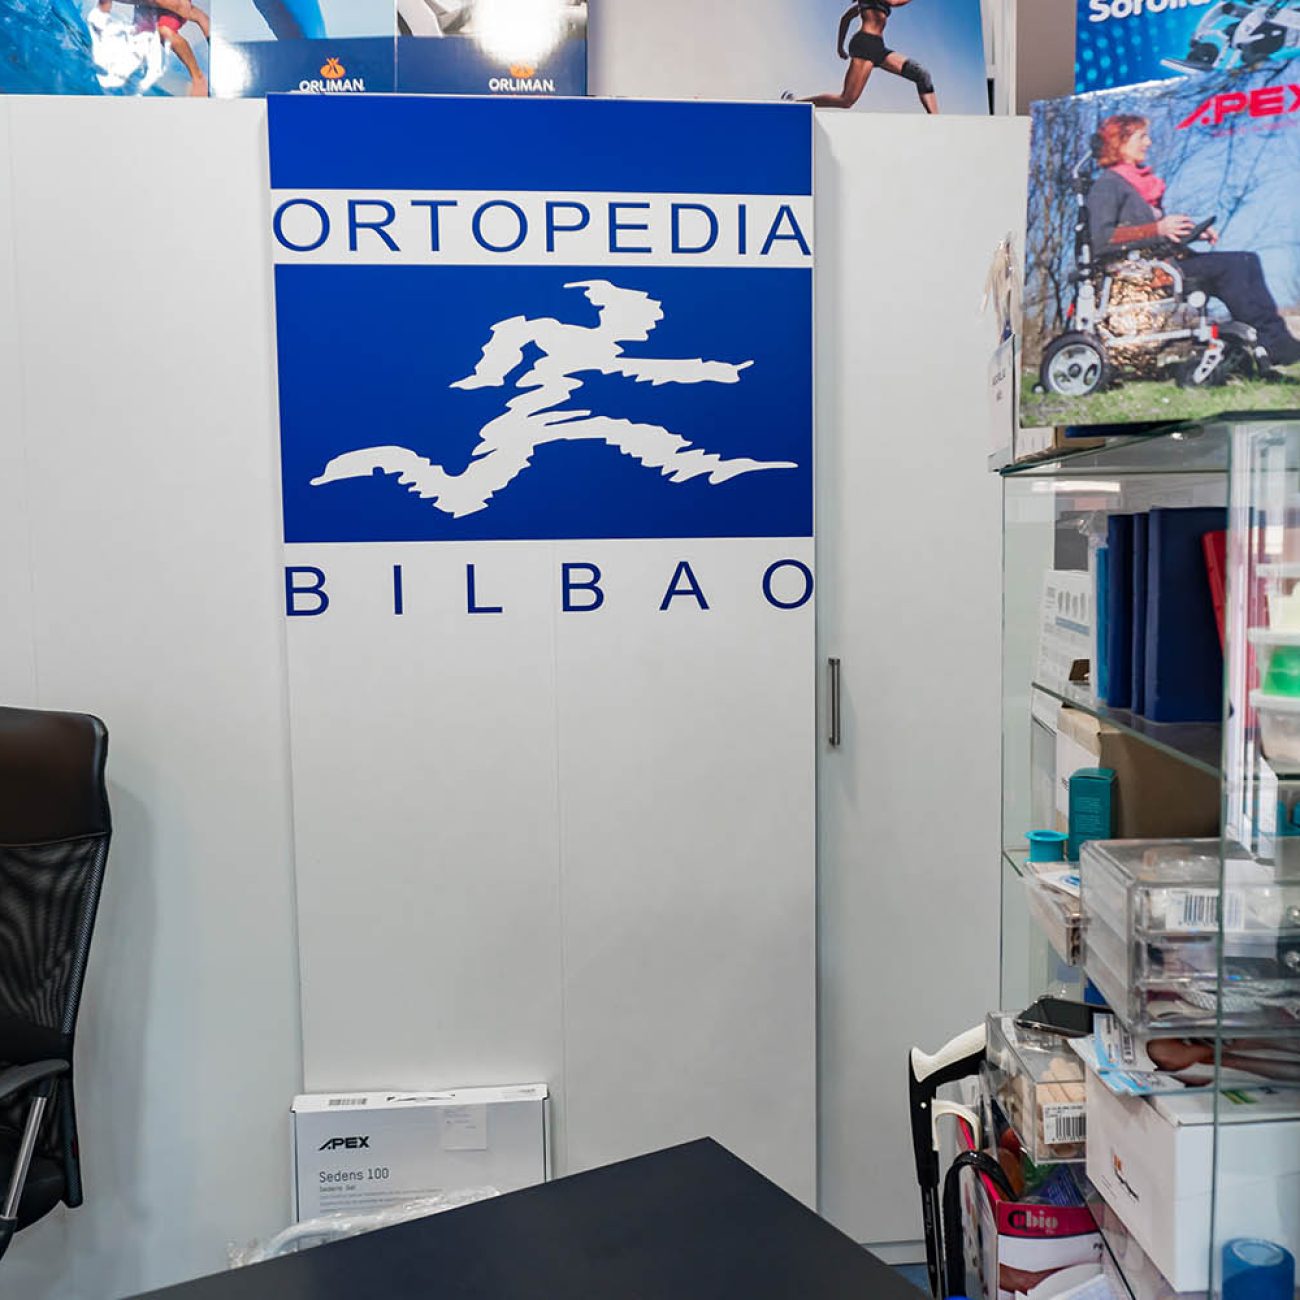 Ortopedia Bilbao